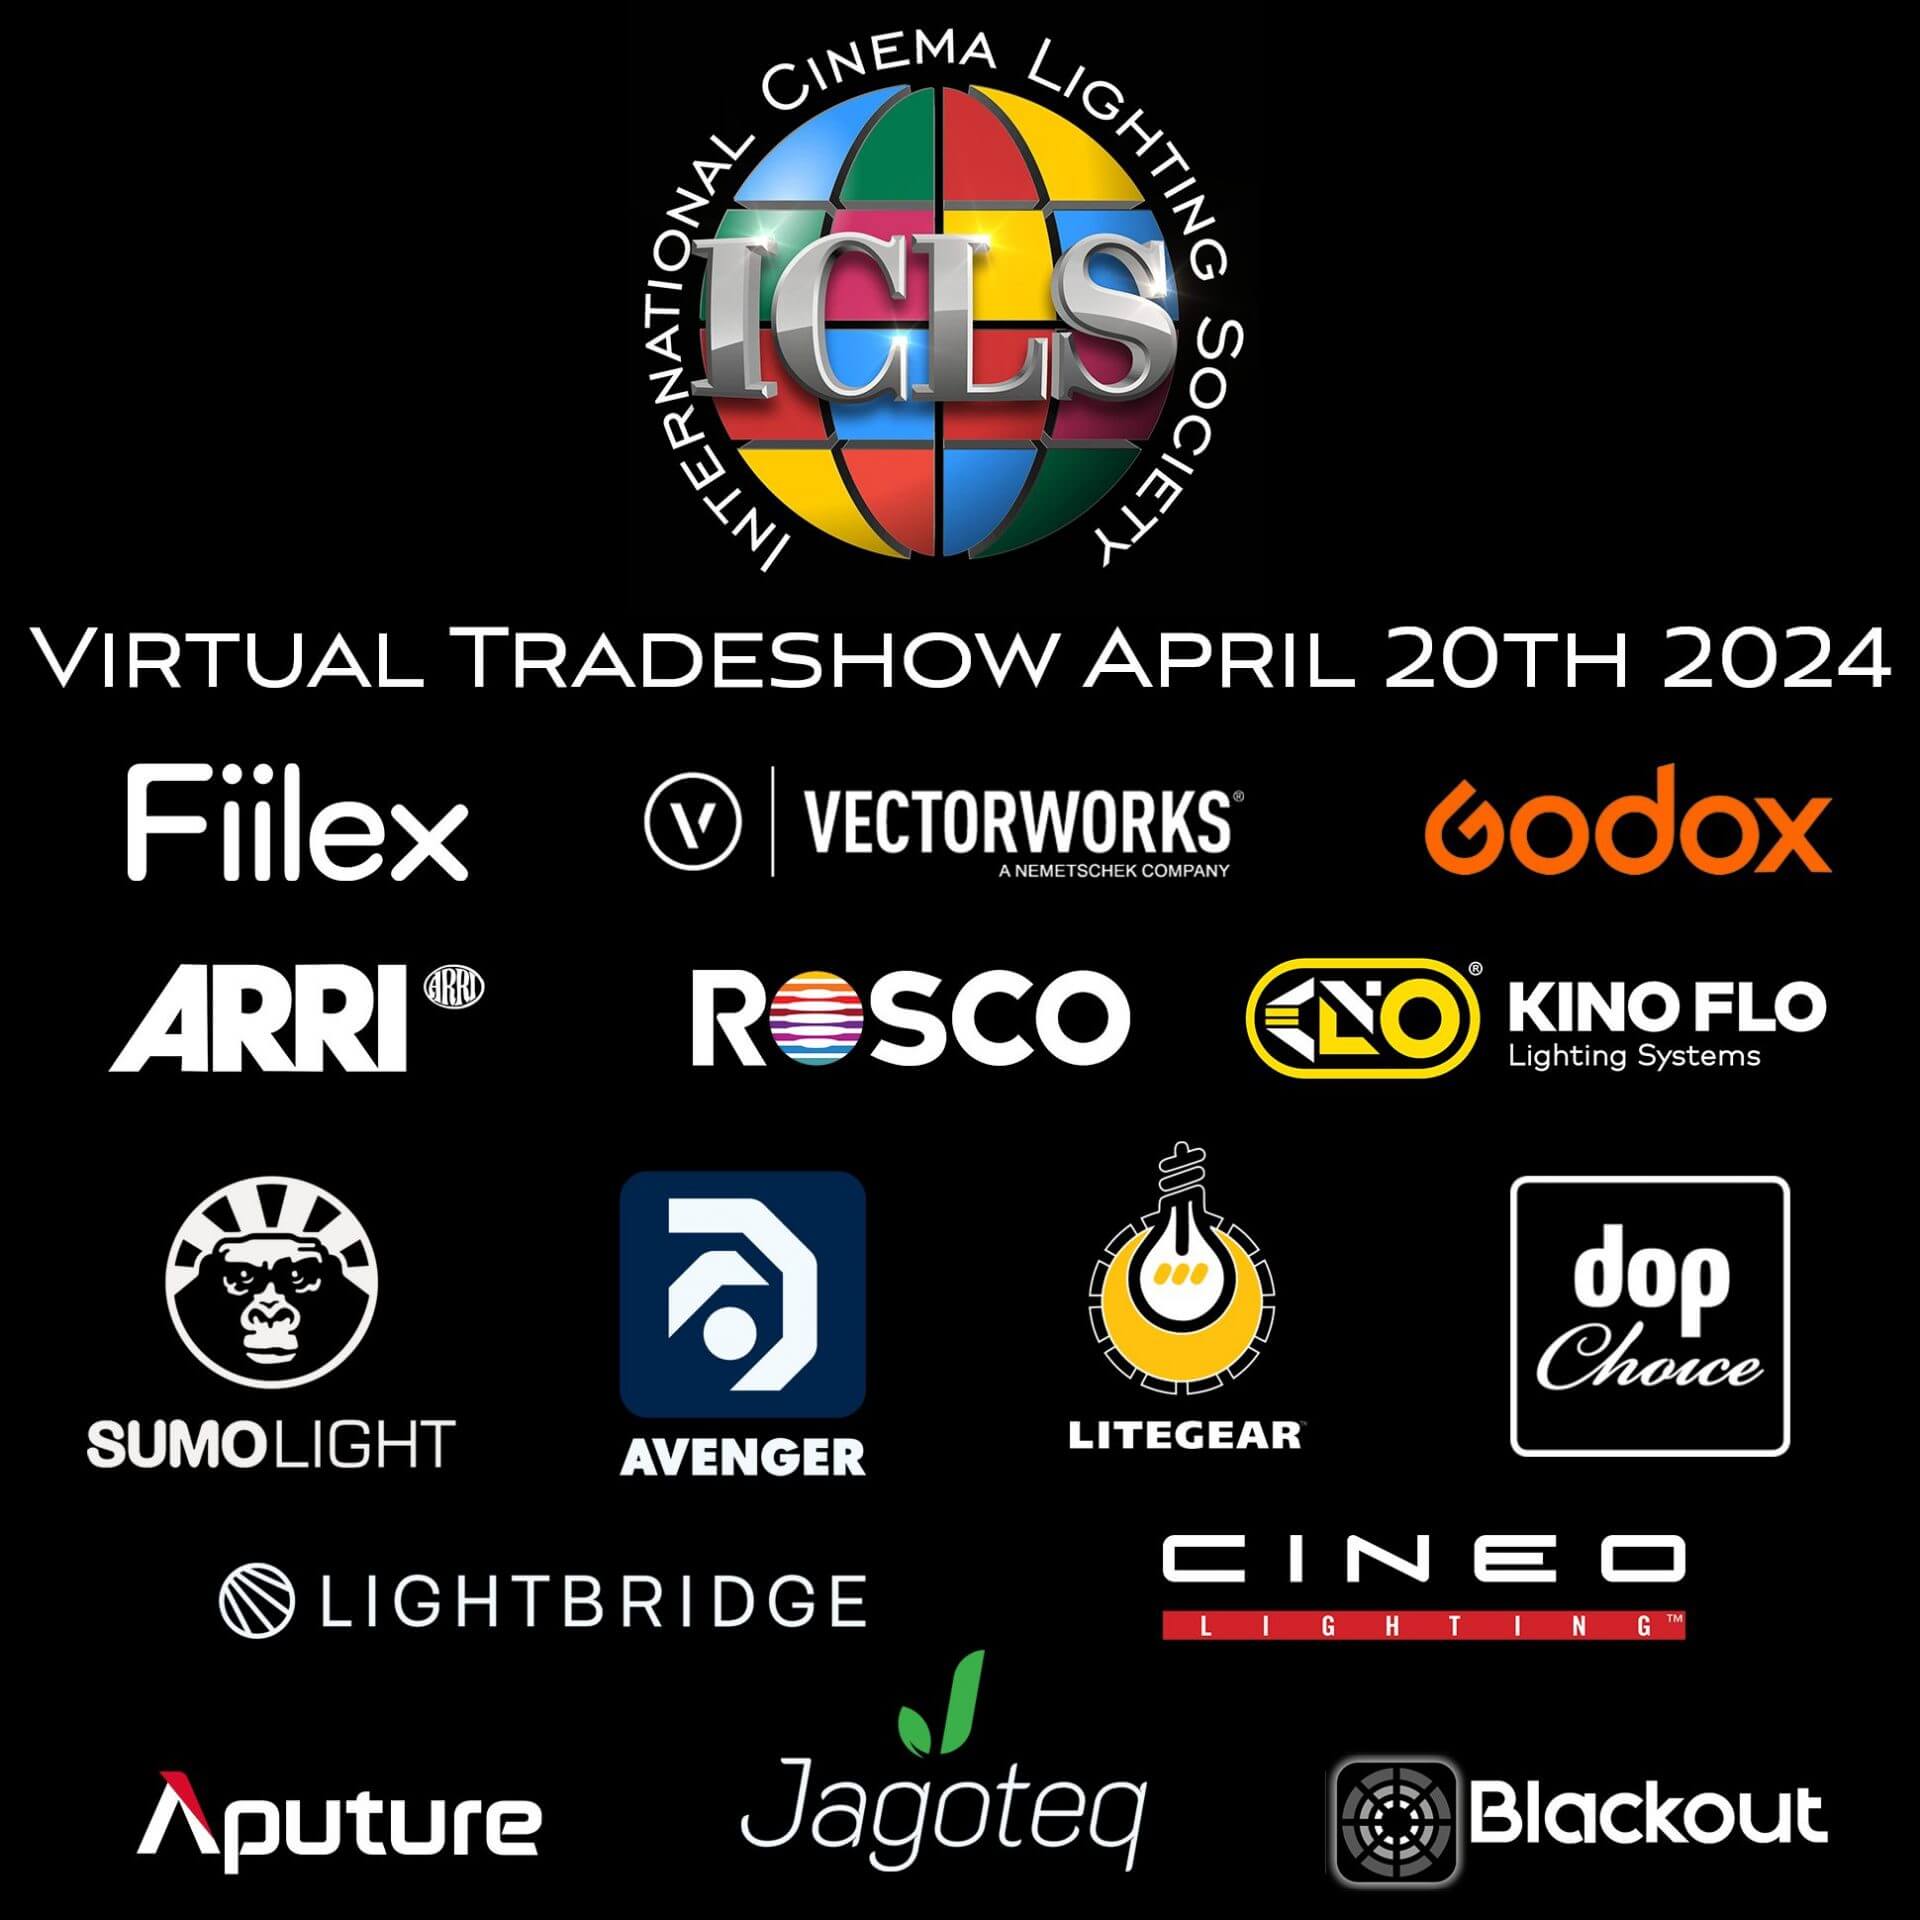 5th ICLS Virtual Tradeshow – CINEO